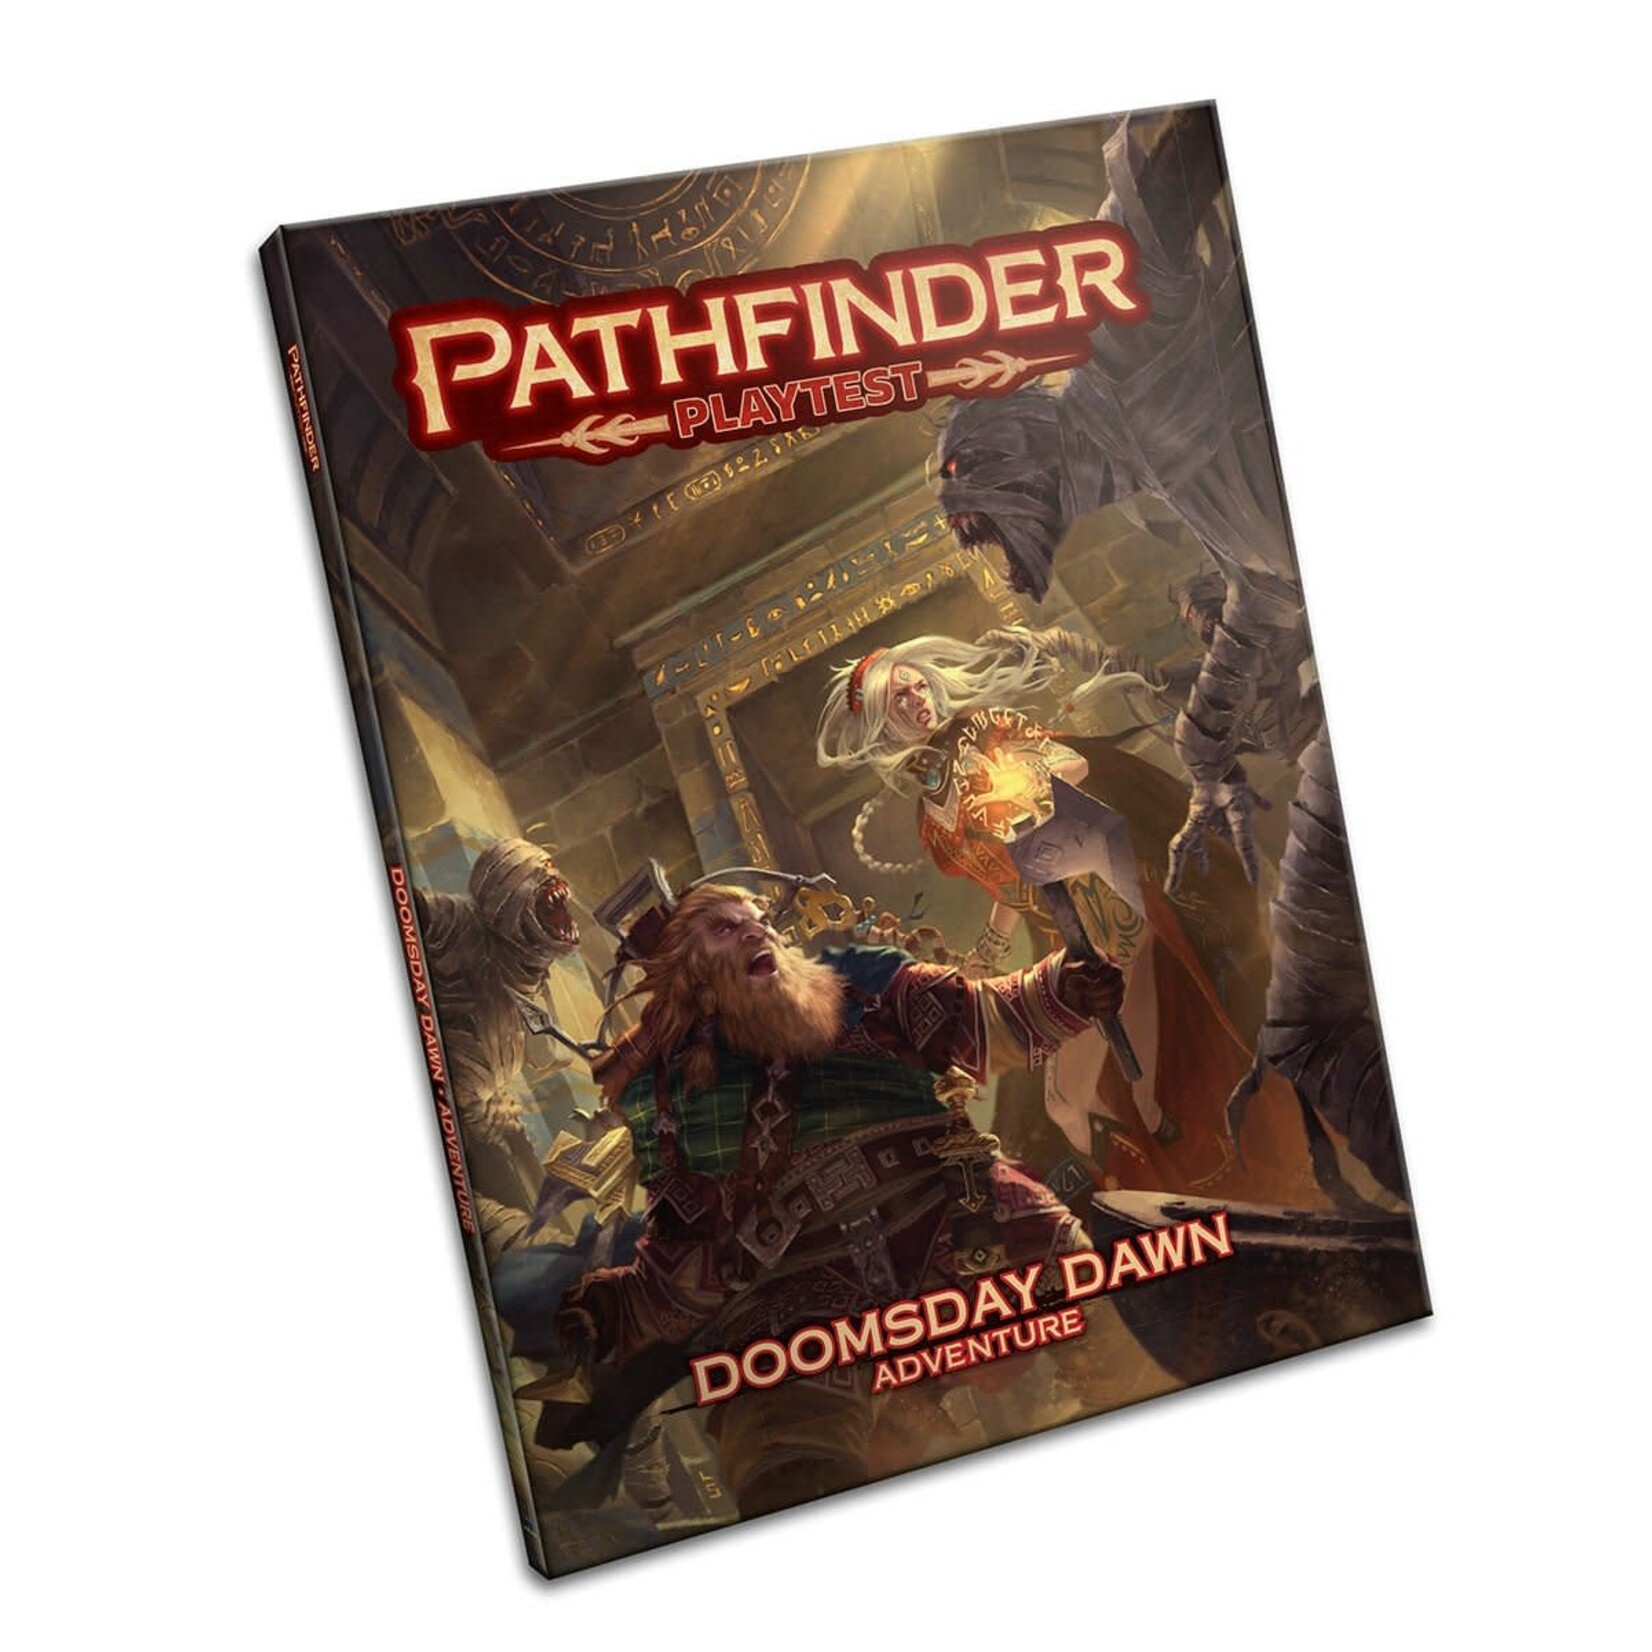 Paizo Pathfinder Playtest Adventure Module "Doomsday Dawn"